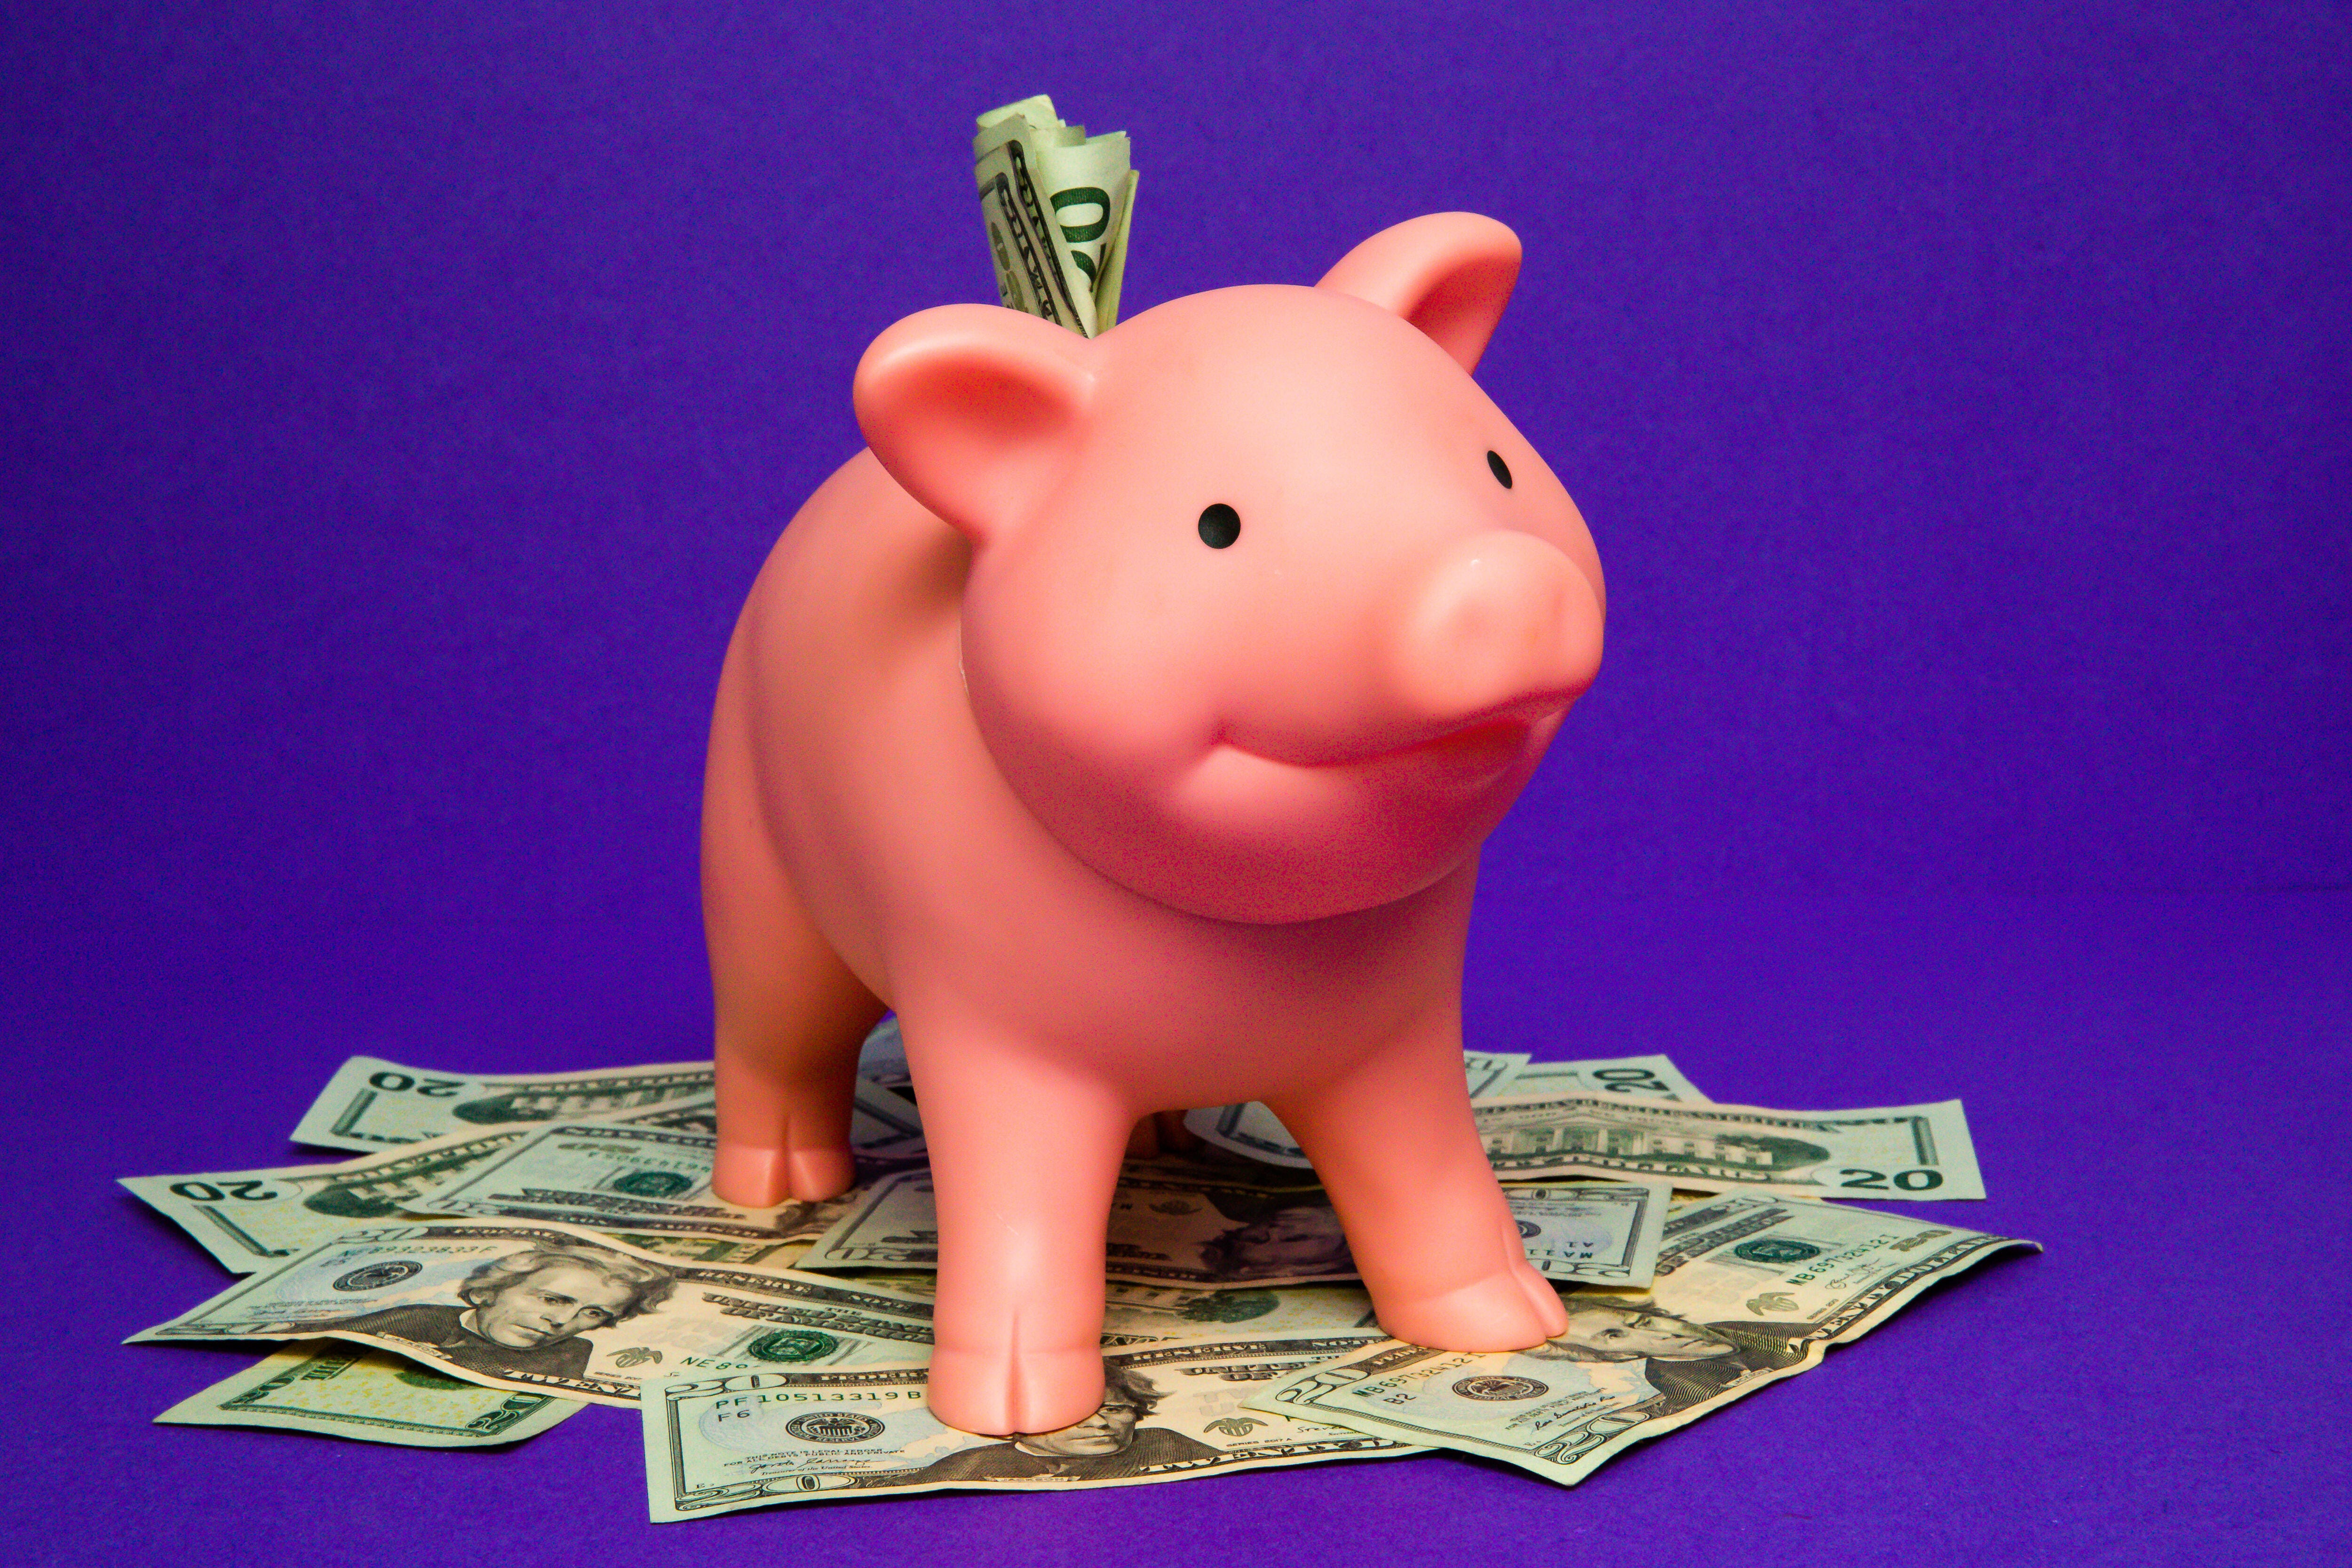 cash-money-stimulus-child-tax-credit-2021-piggy-bank-savings-july-15-payment-calendar-30